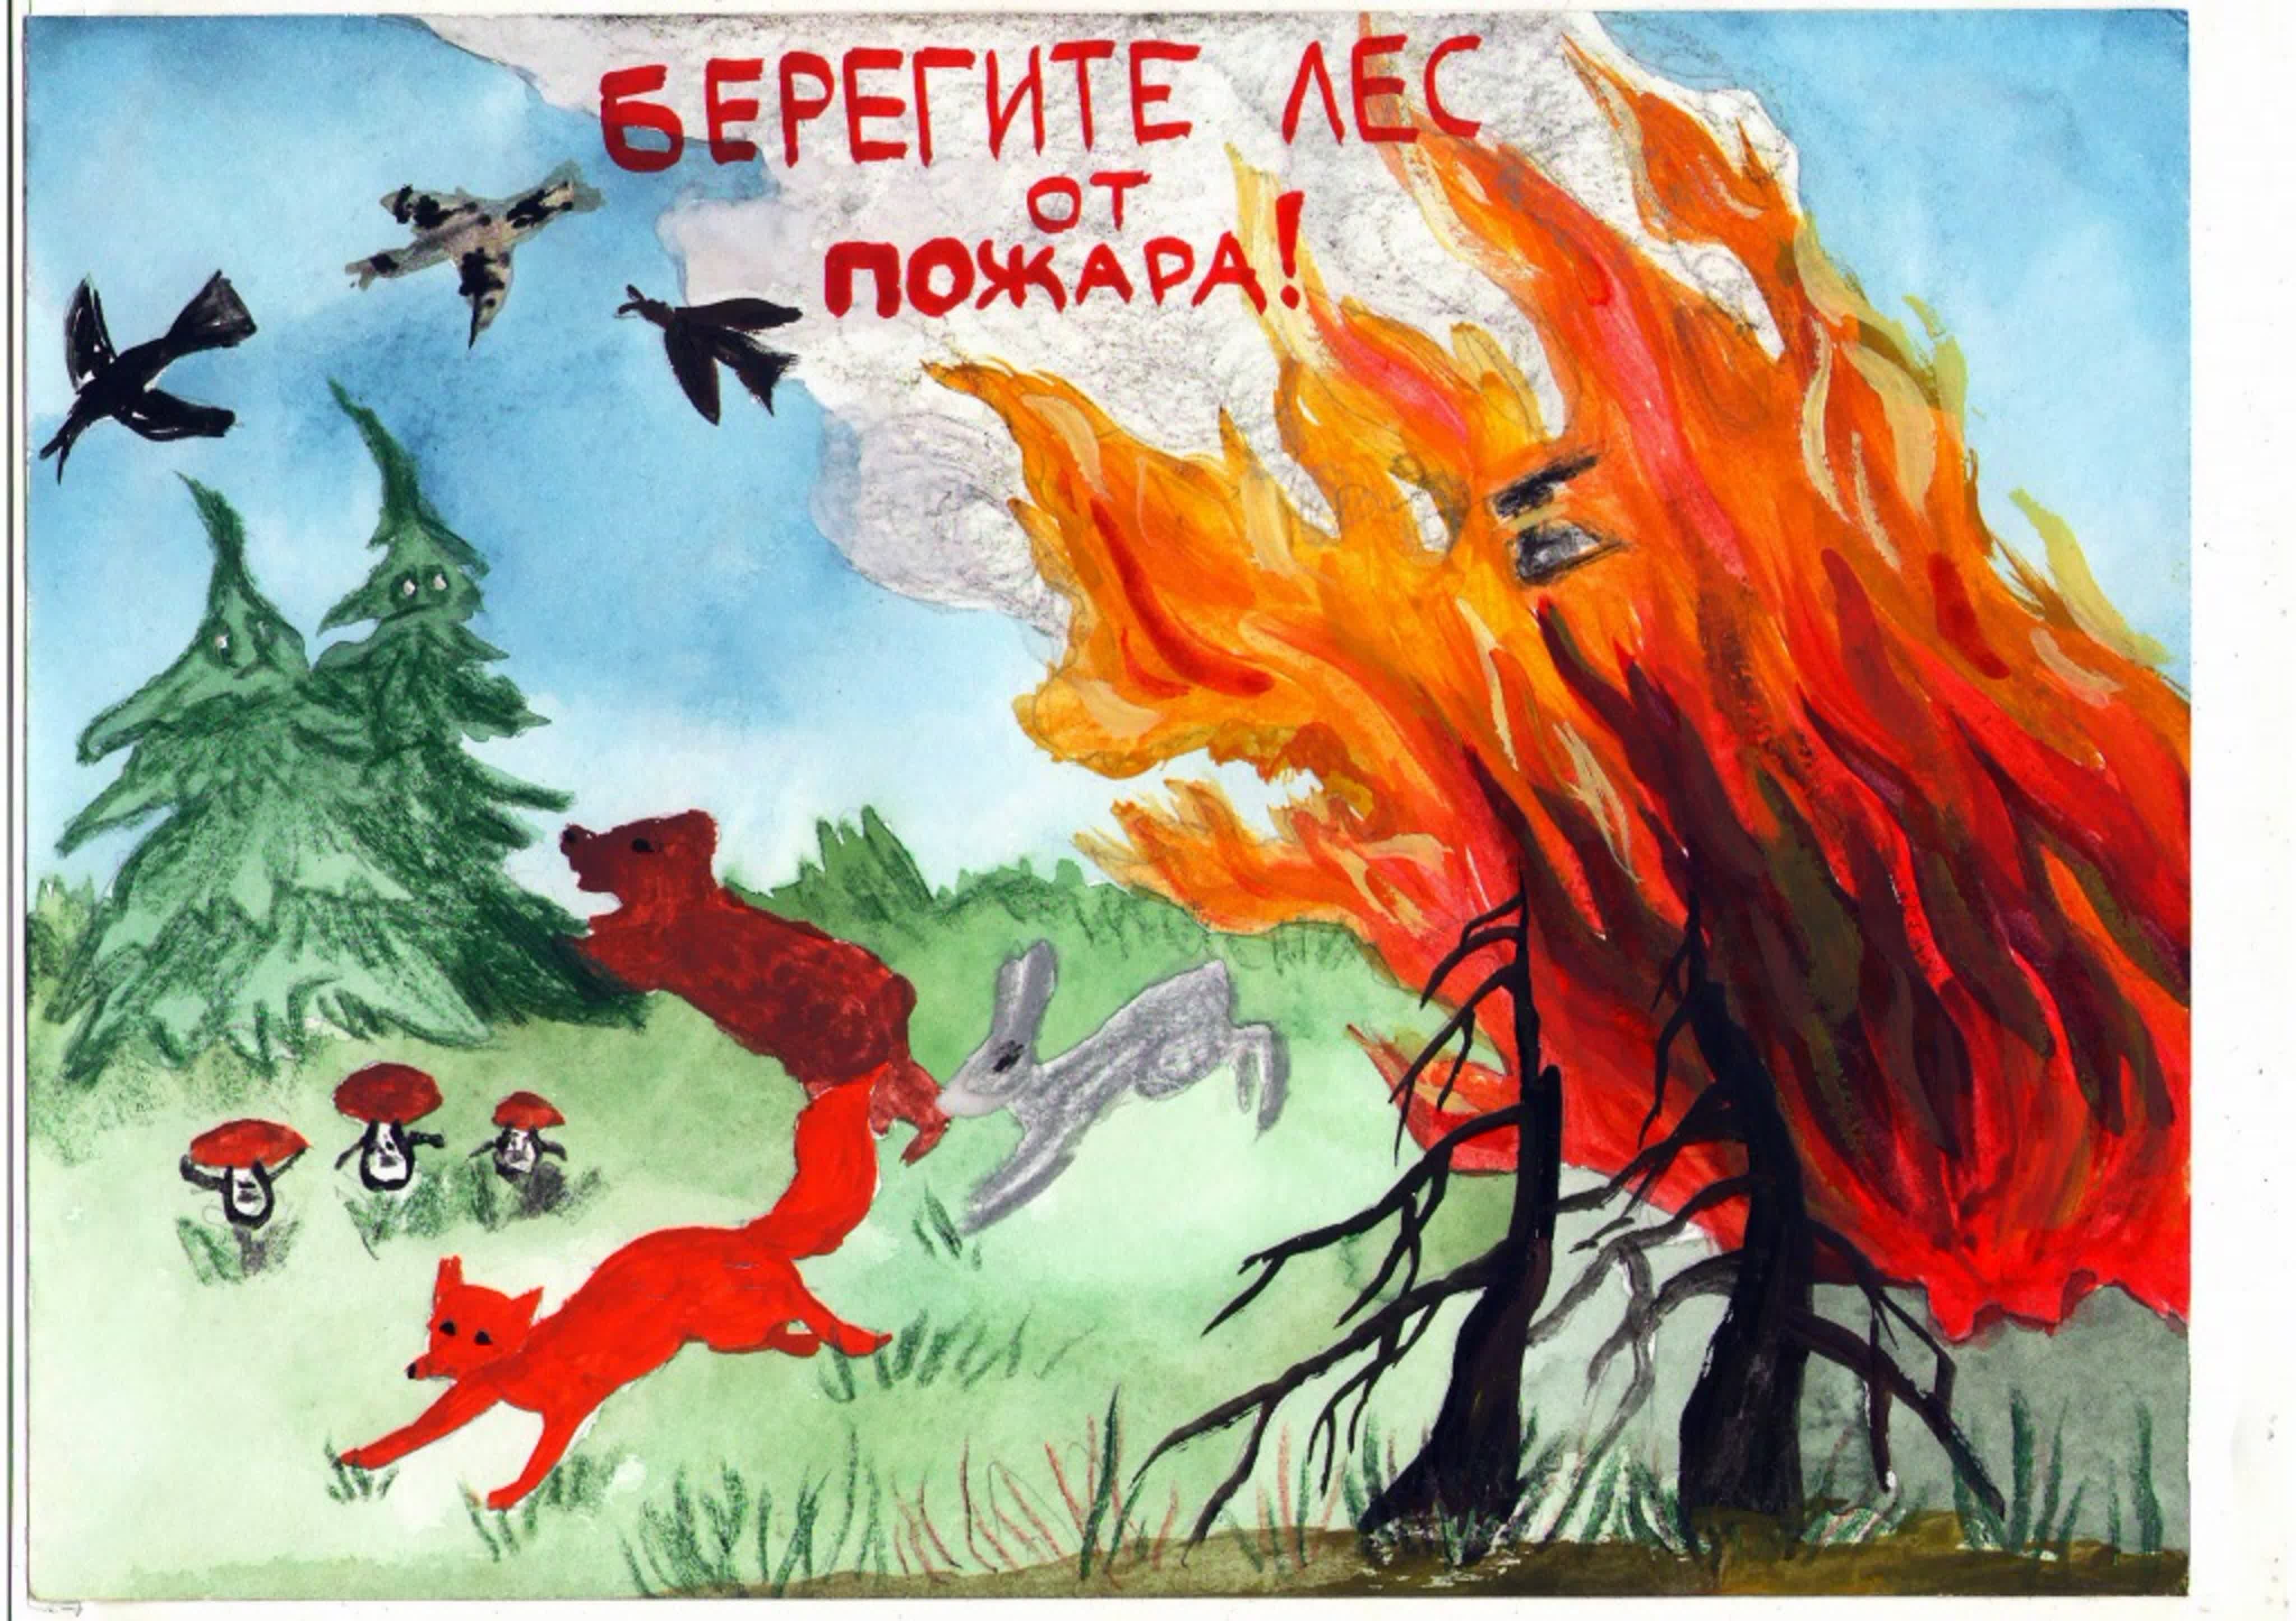 Плакат берегите лес от пожара